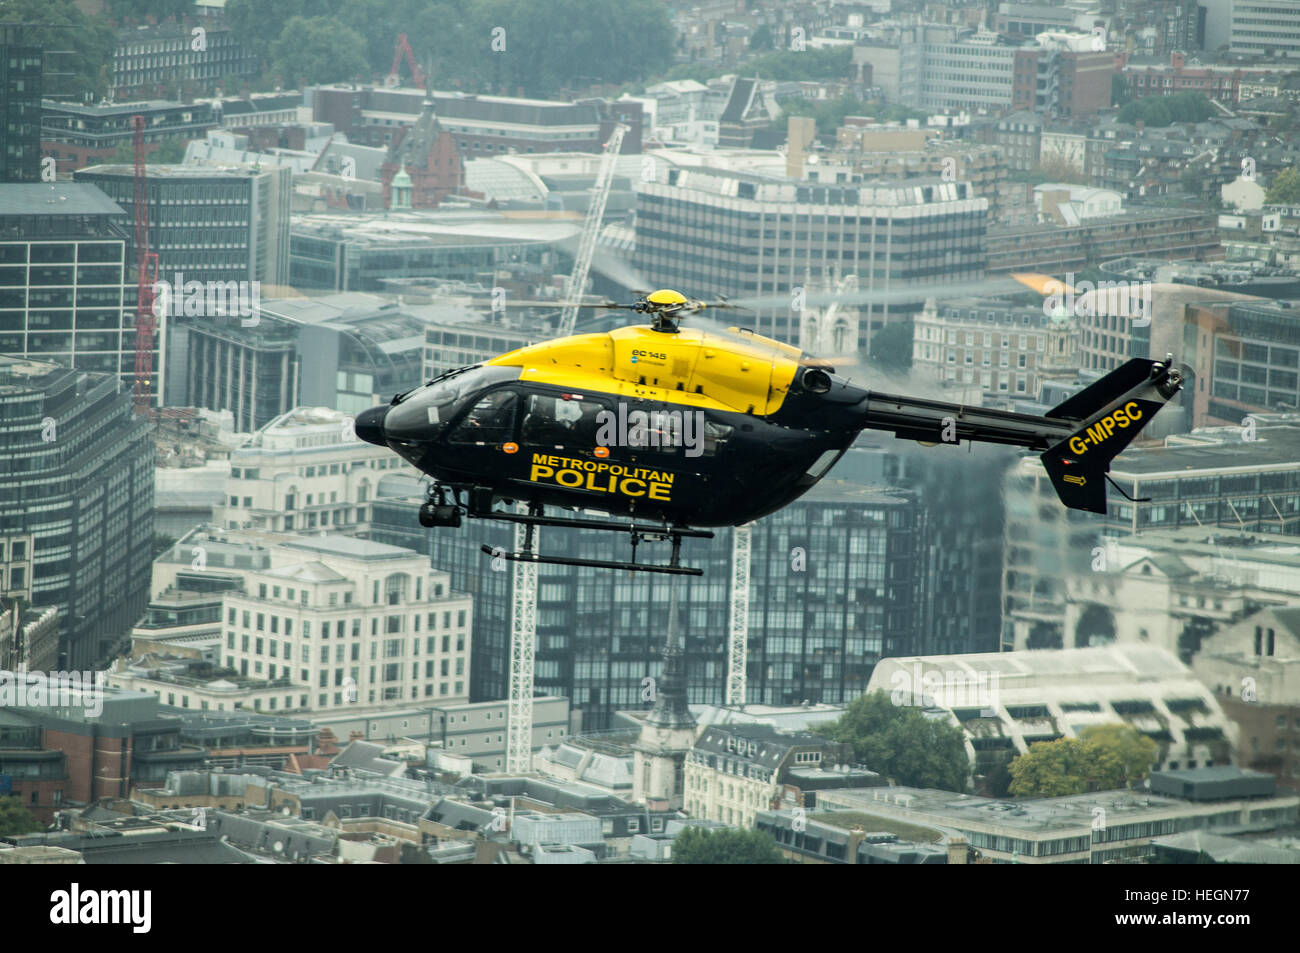 London metropolitan police helicopter above London. Stock Photo